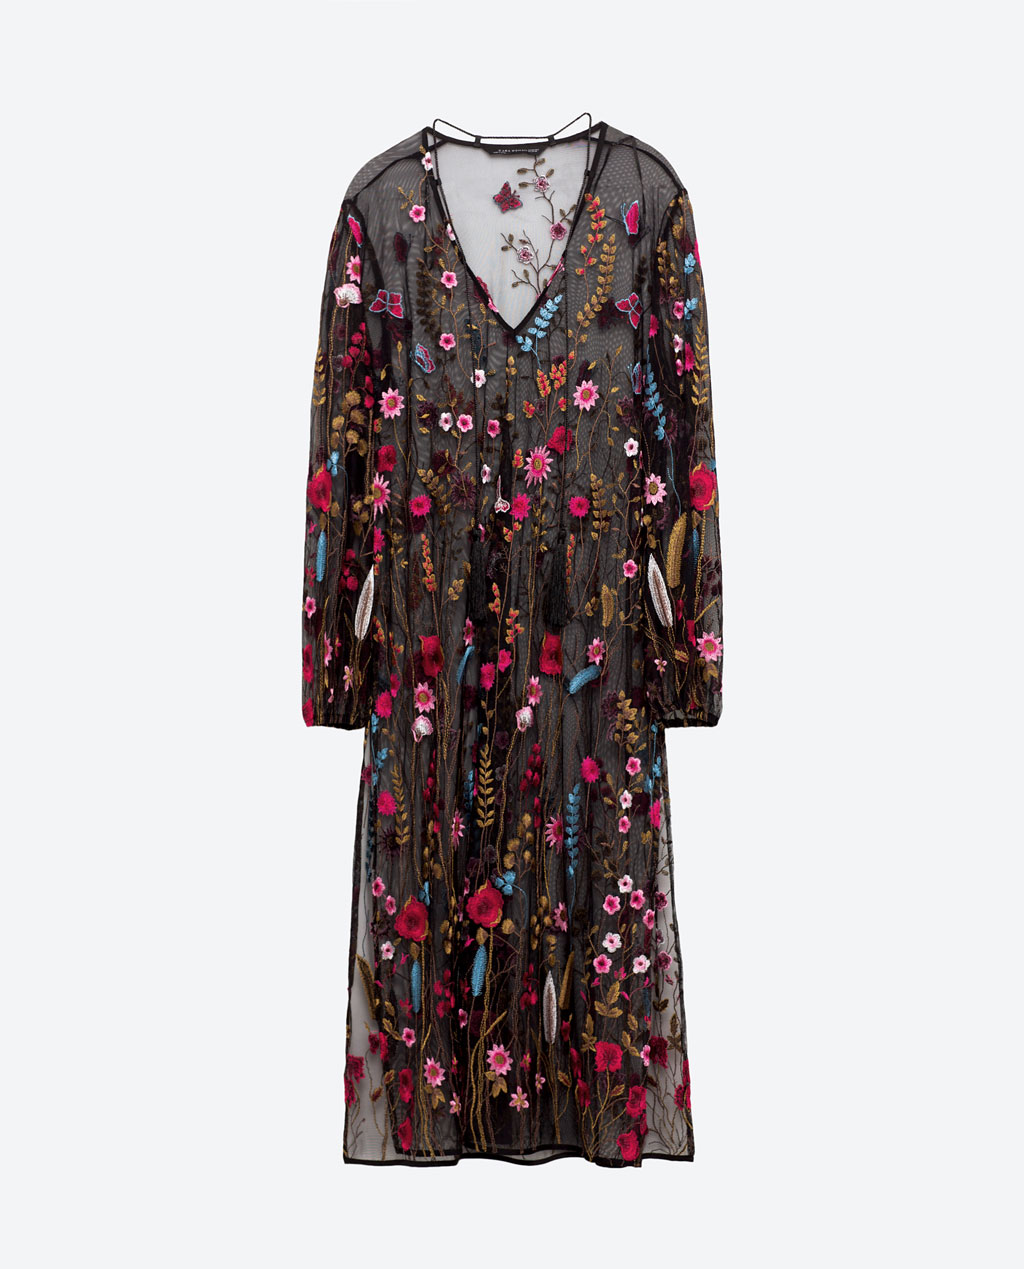 http://www.zara.com/us/en/sale/woman/dresses/long-embroidered-dress-c437631p3814570.html